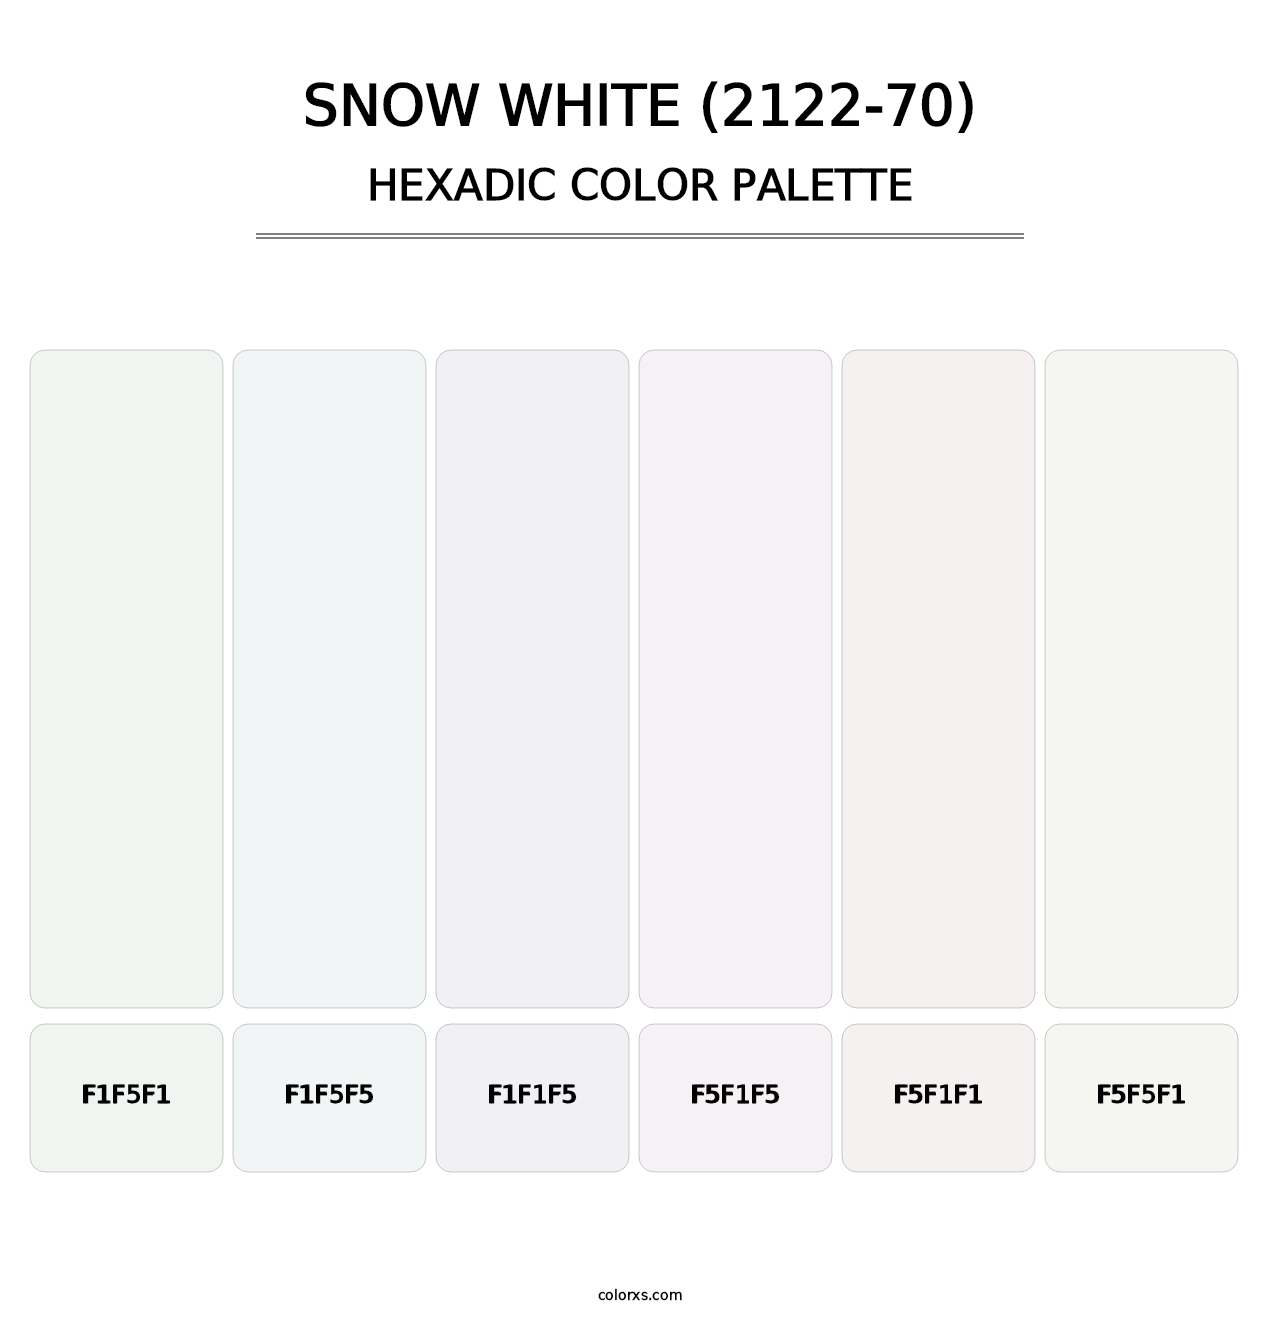 Snow White (2122-70) - Hexadic Color Palette